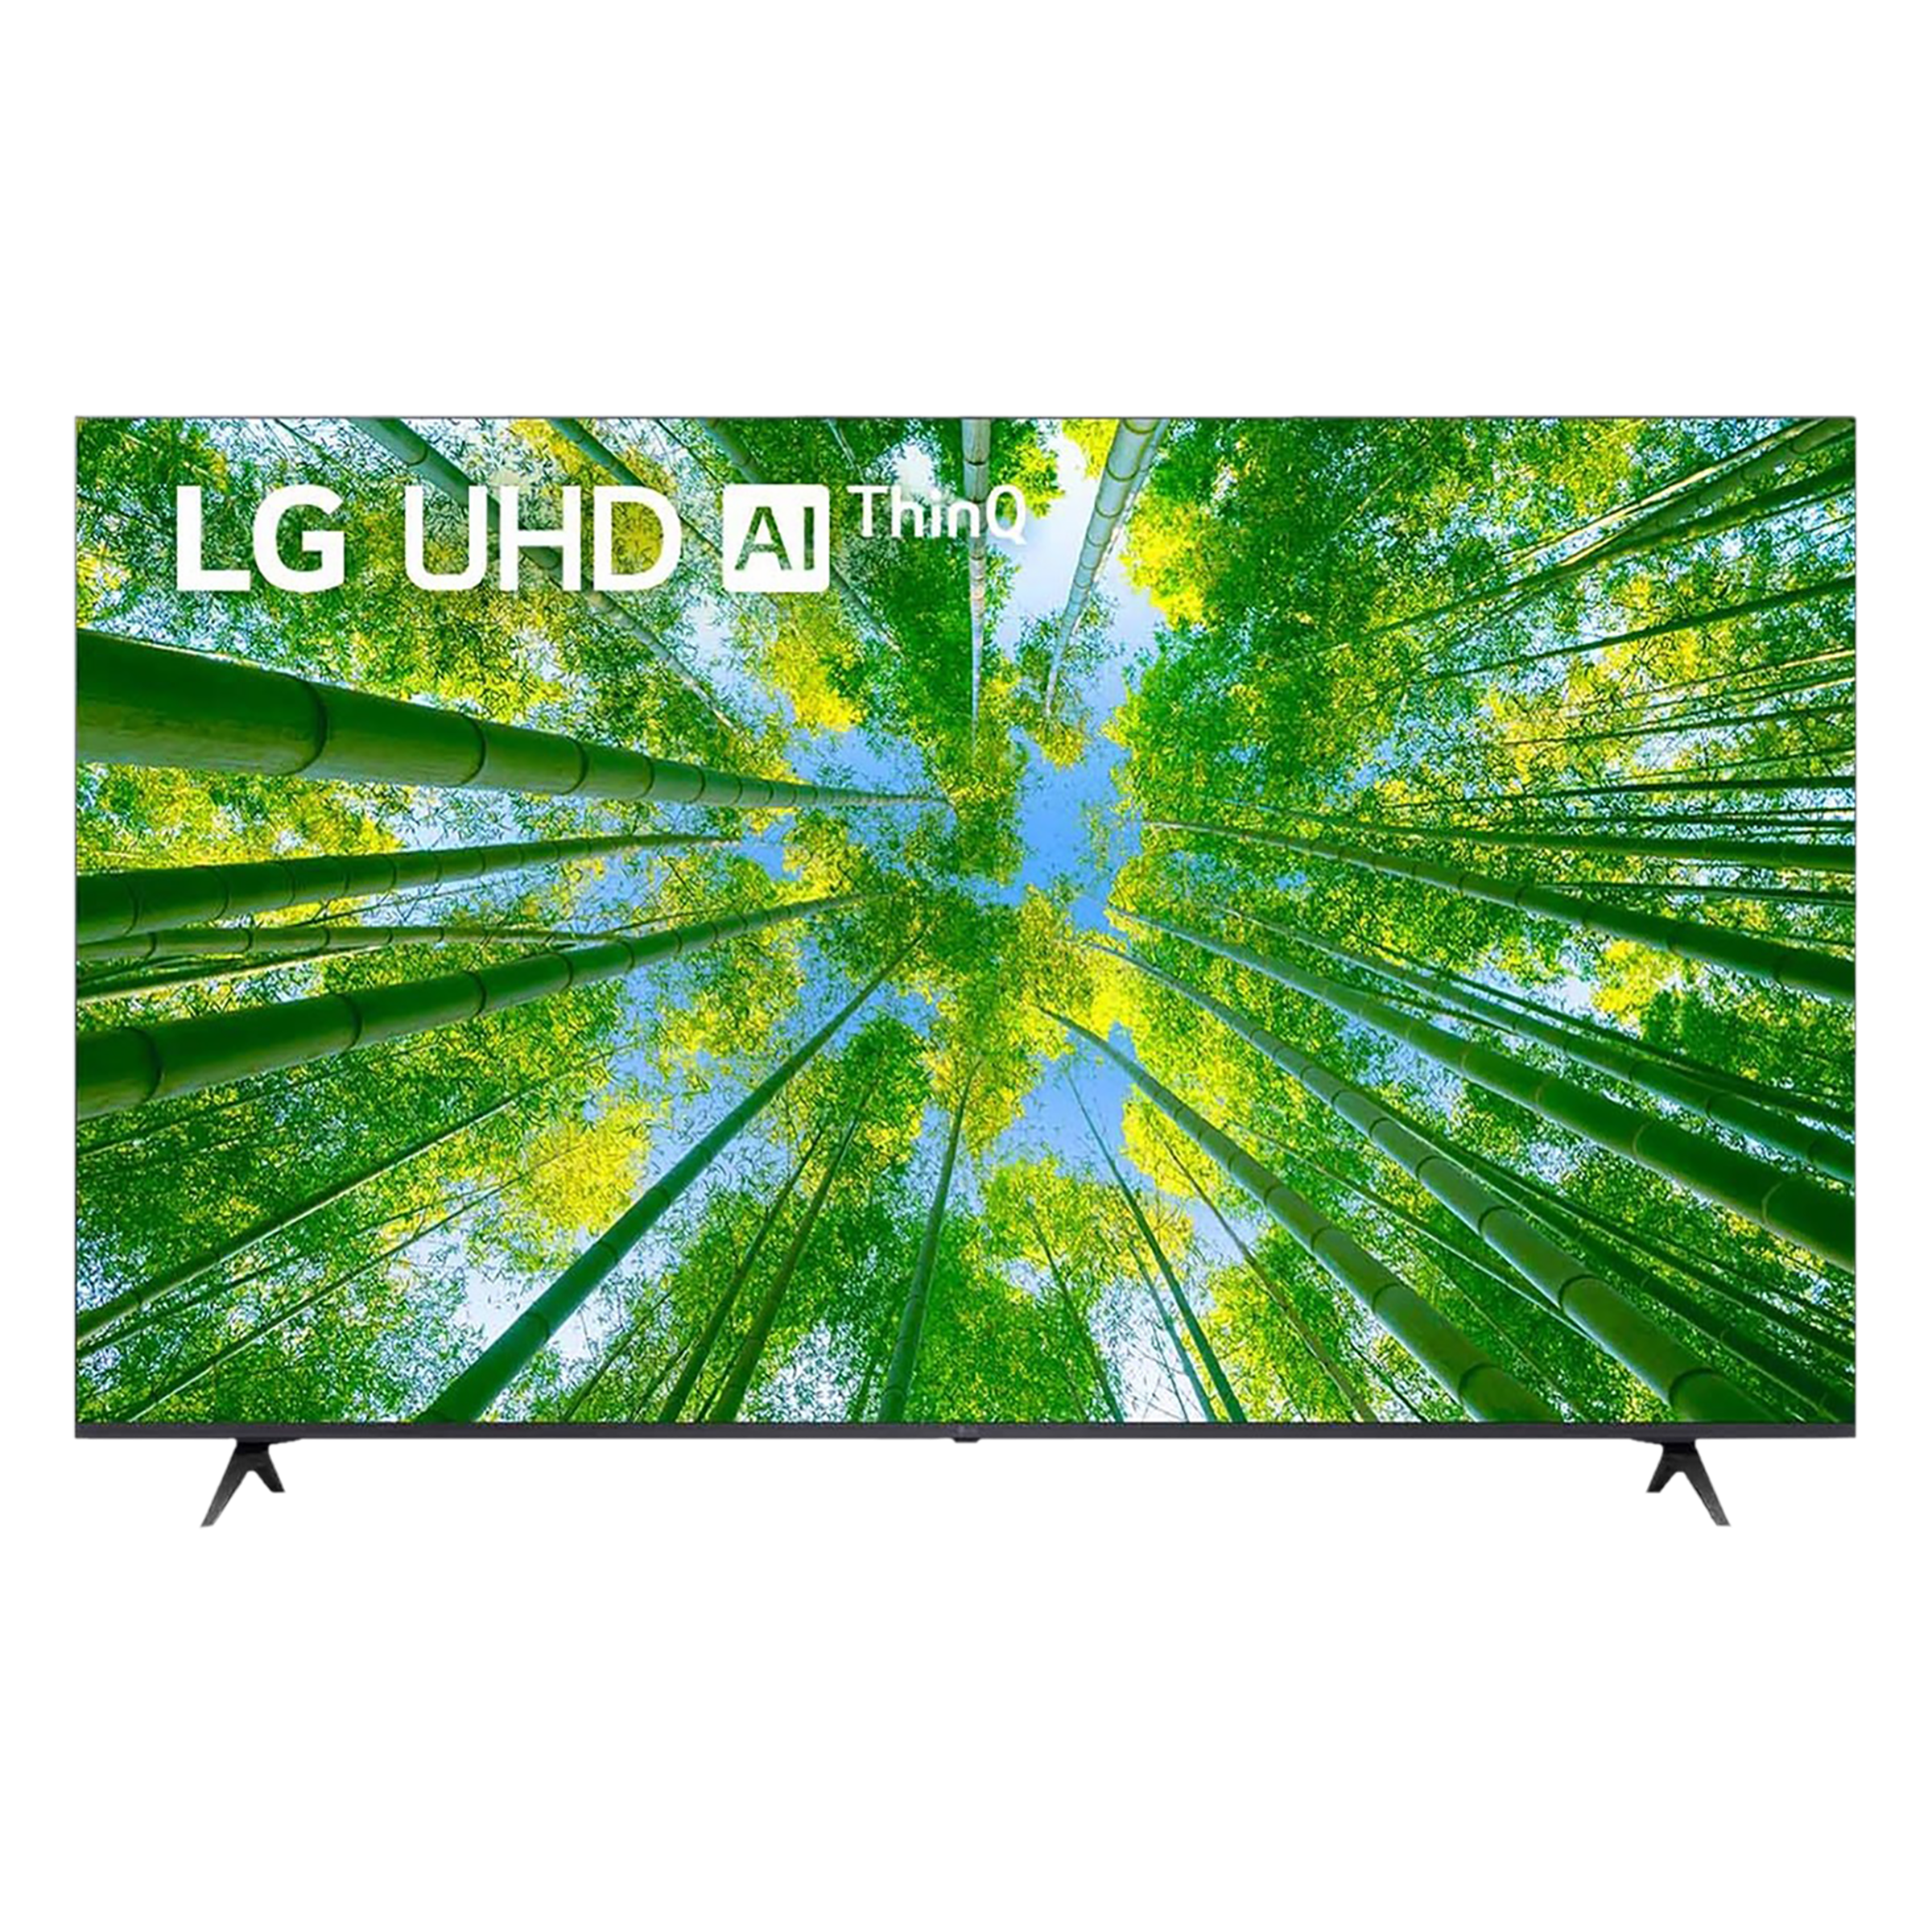 LG 100 cm (40-inch) 40LF6300 Full HD Smart LED TV Online at Best